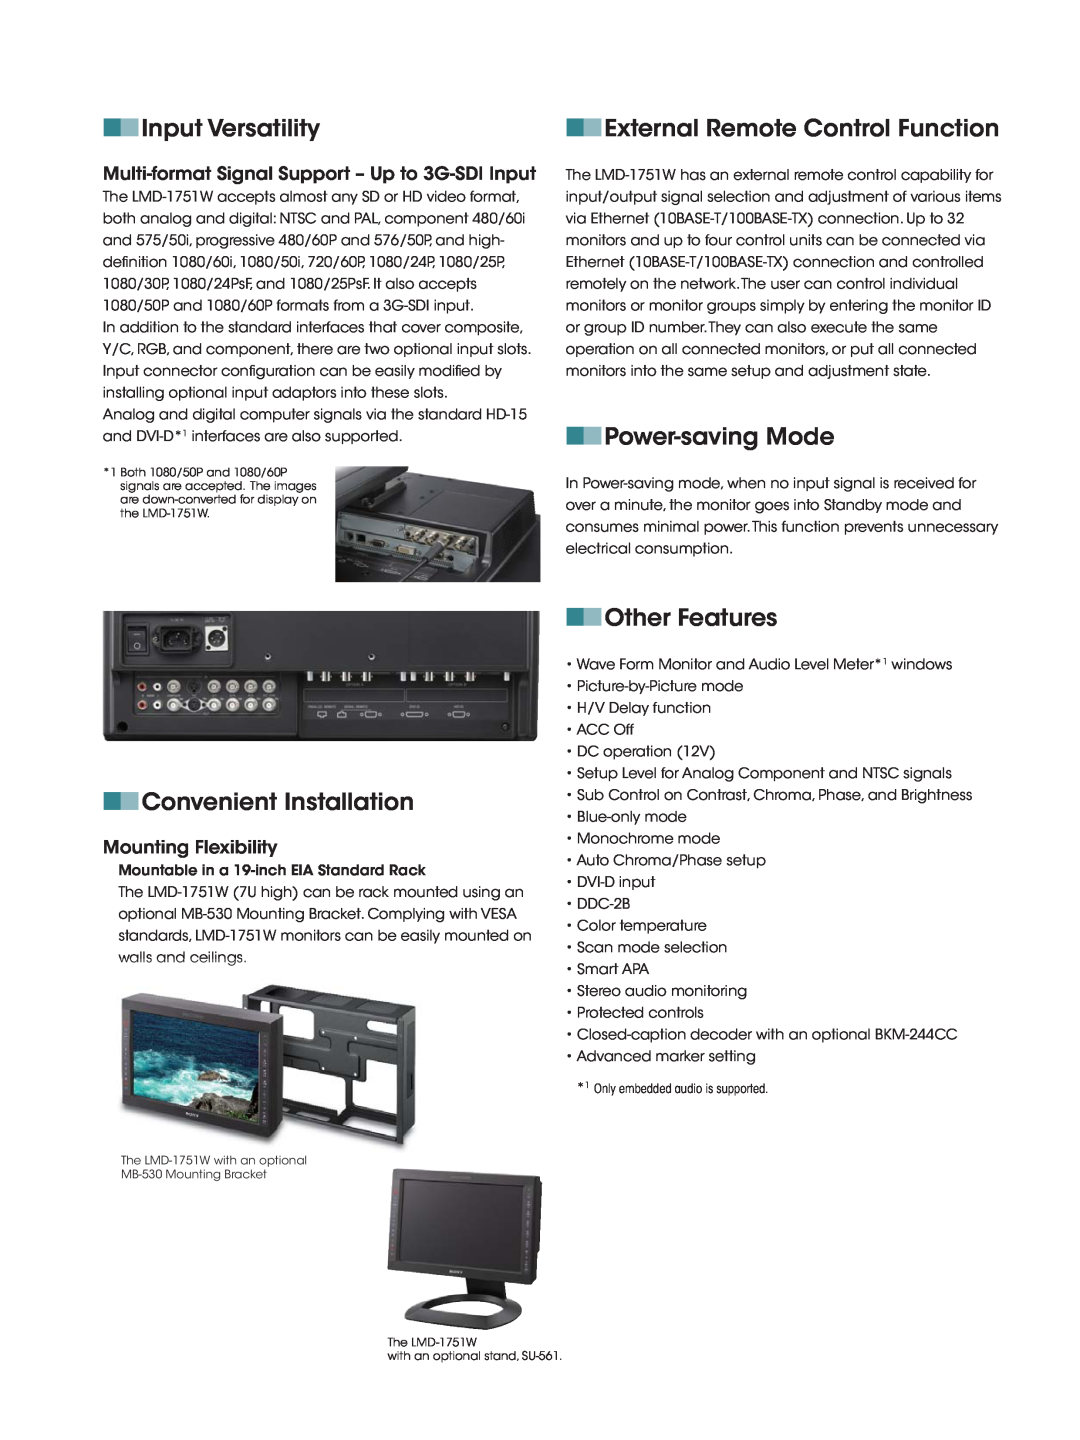 Sony LMD-1751W manual Input Versatility, External Remote Control Function, Power-saving Mode, Convenient Installation 